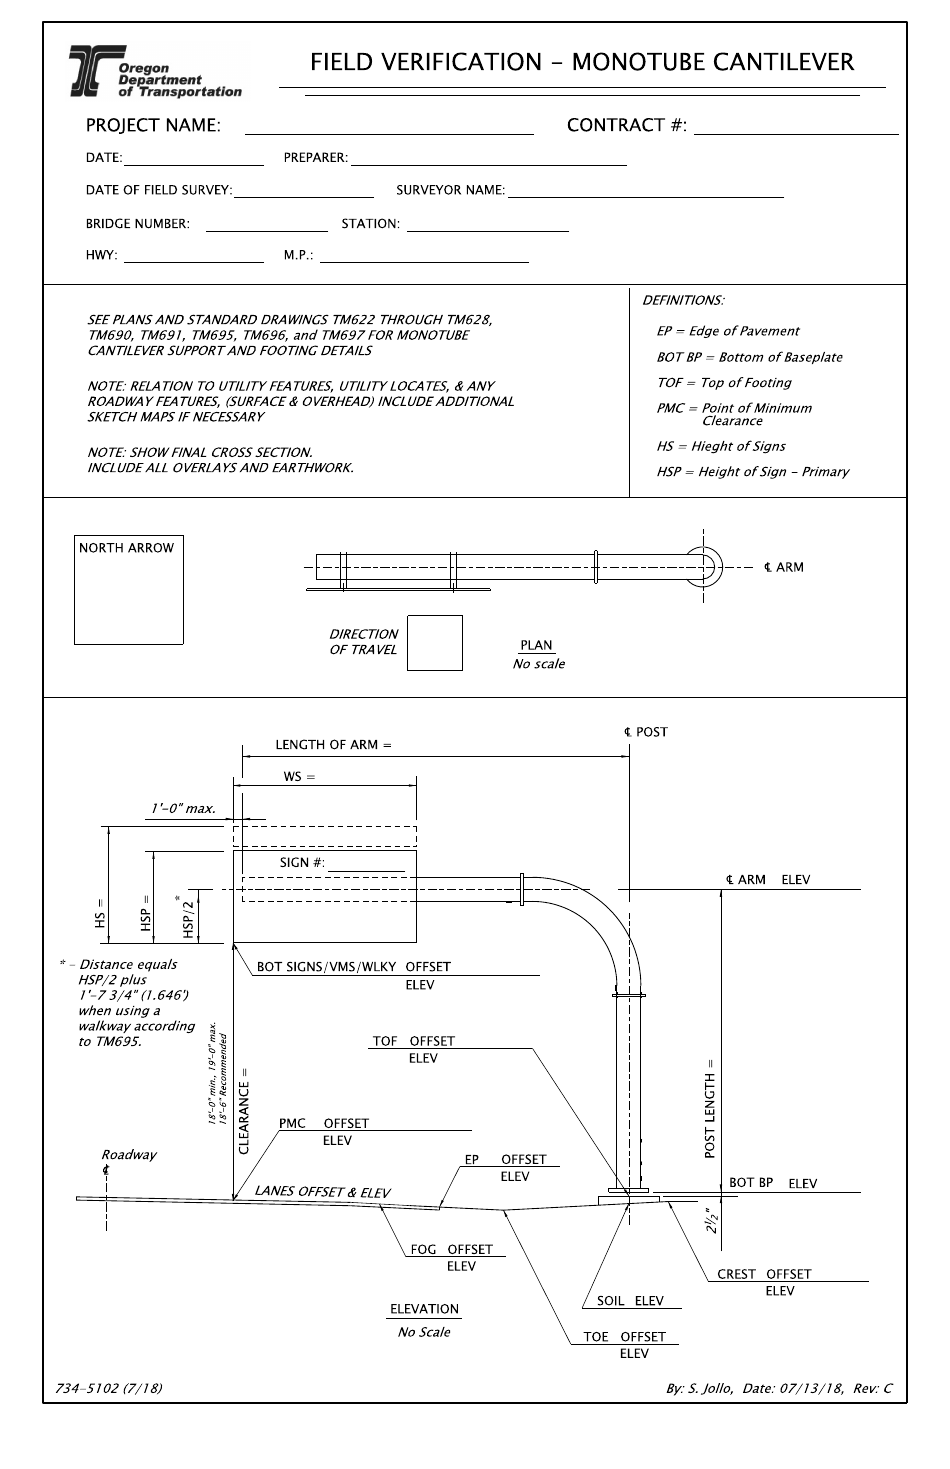 Form 734-5102 Field Verification - Monotube Cantilever - Oregon, Page 1